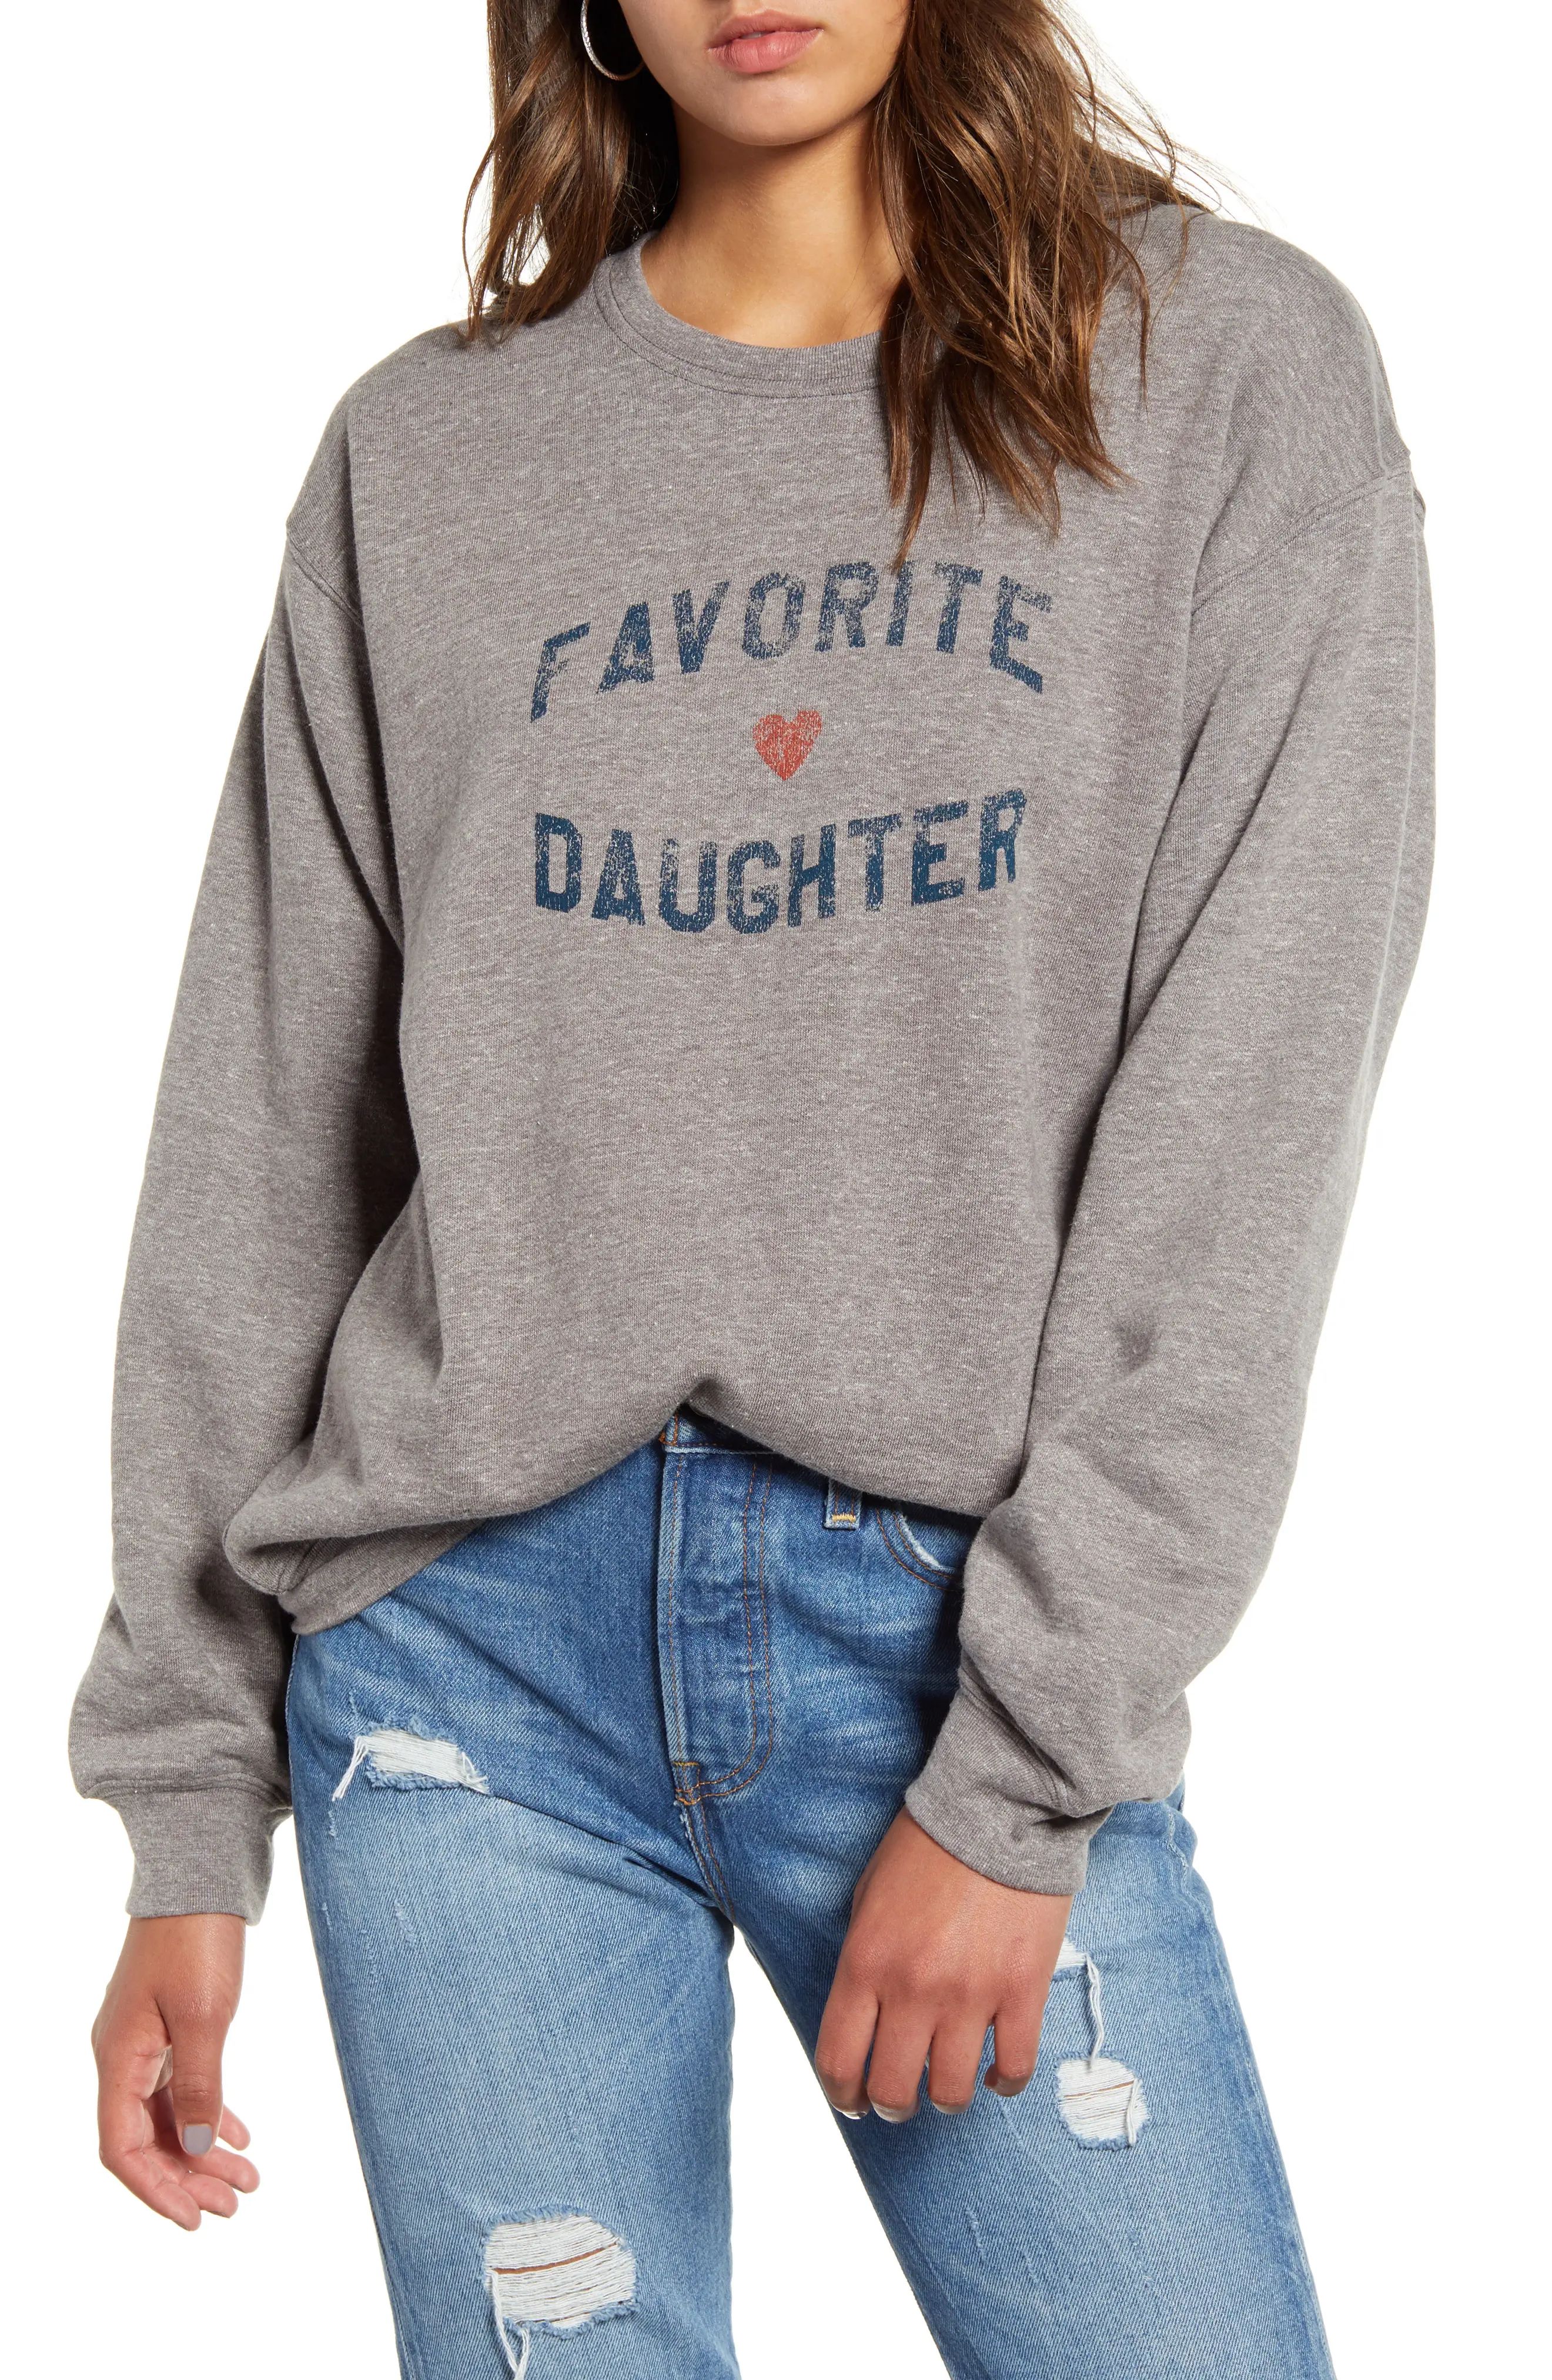 Women's Sub Urban Riot Favorite Daughter Graphic Sweatshirt, Size Large - Grey | Nordstrom